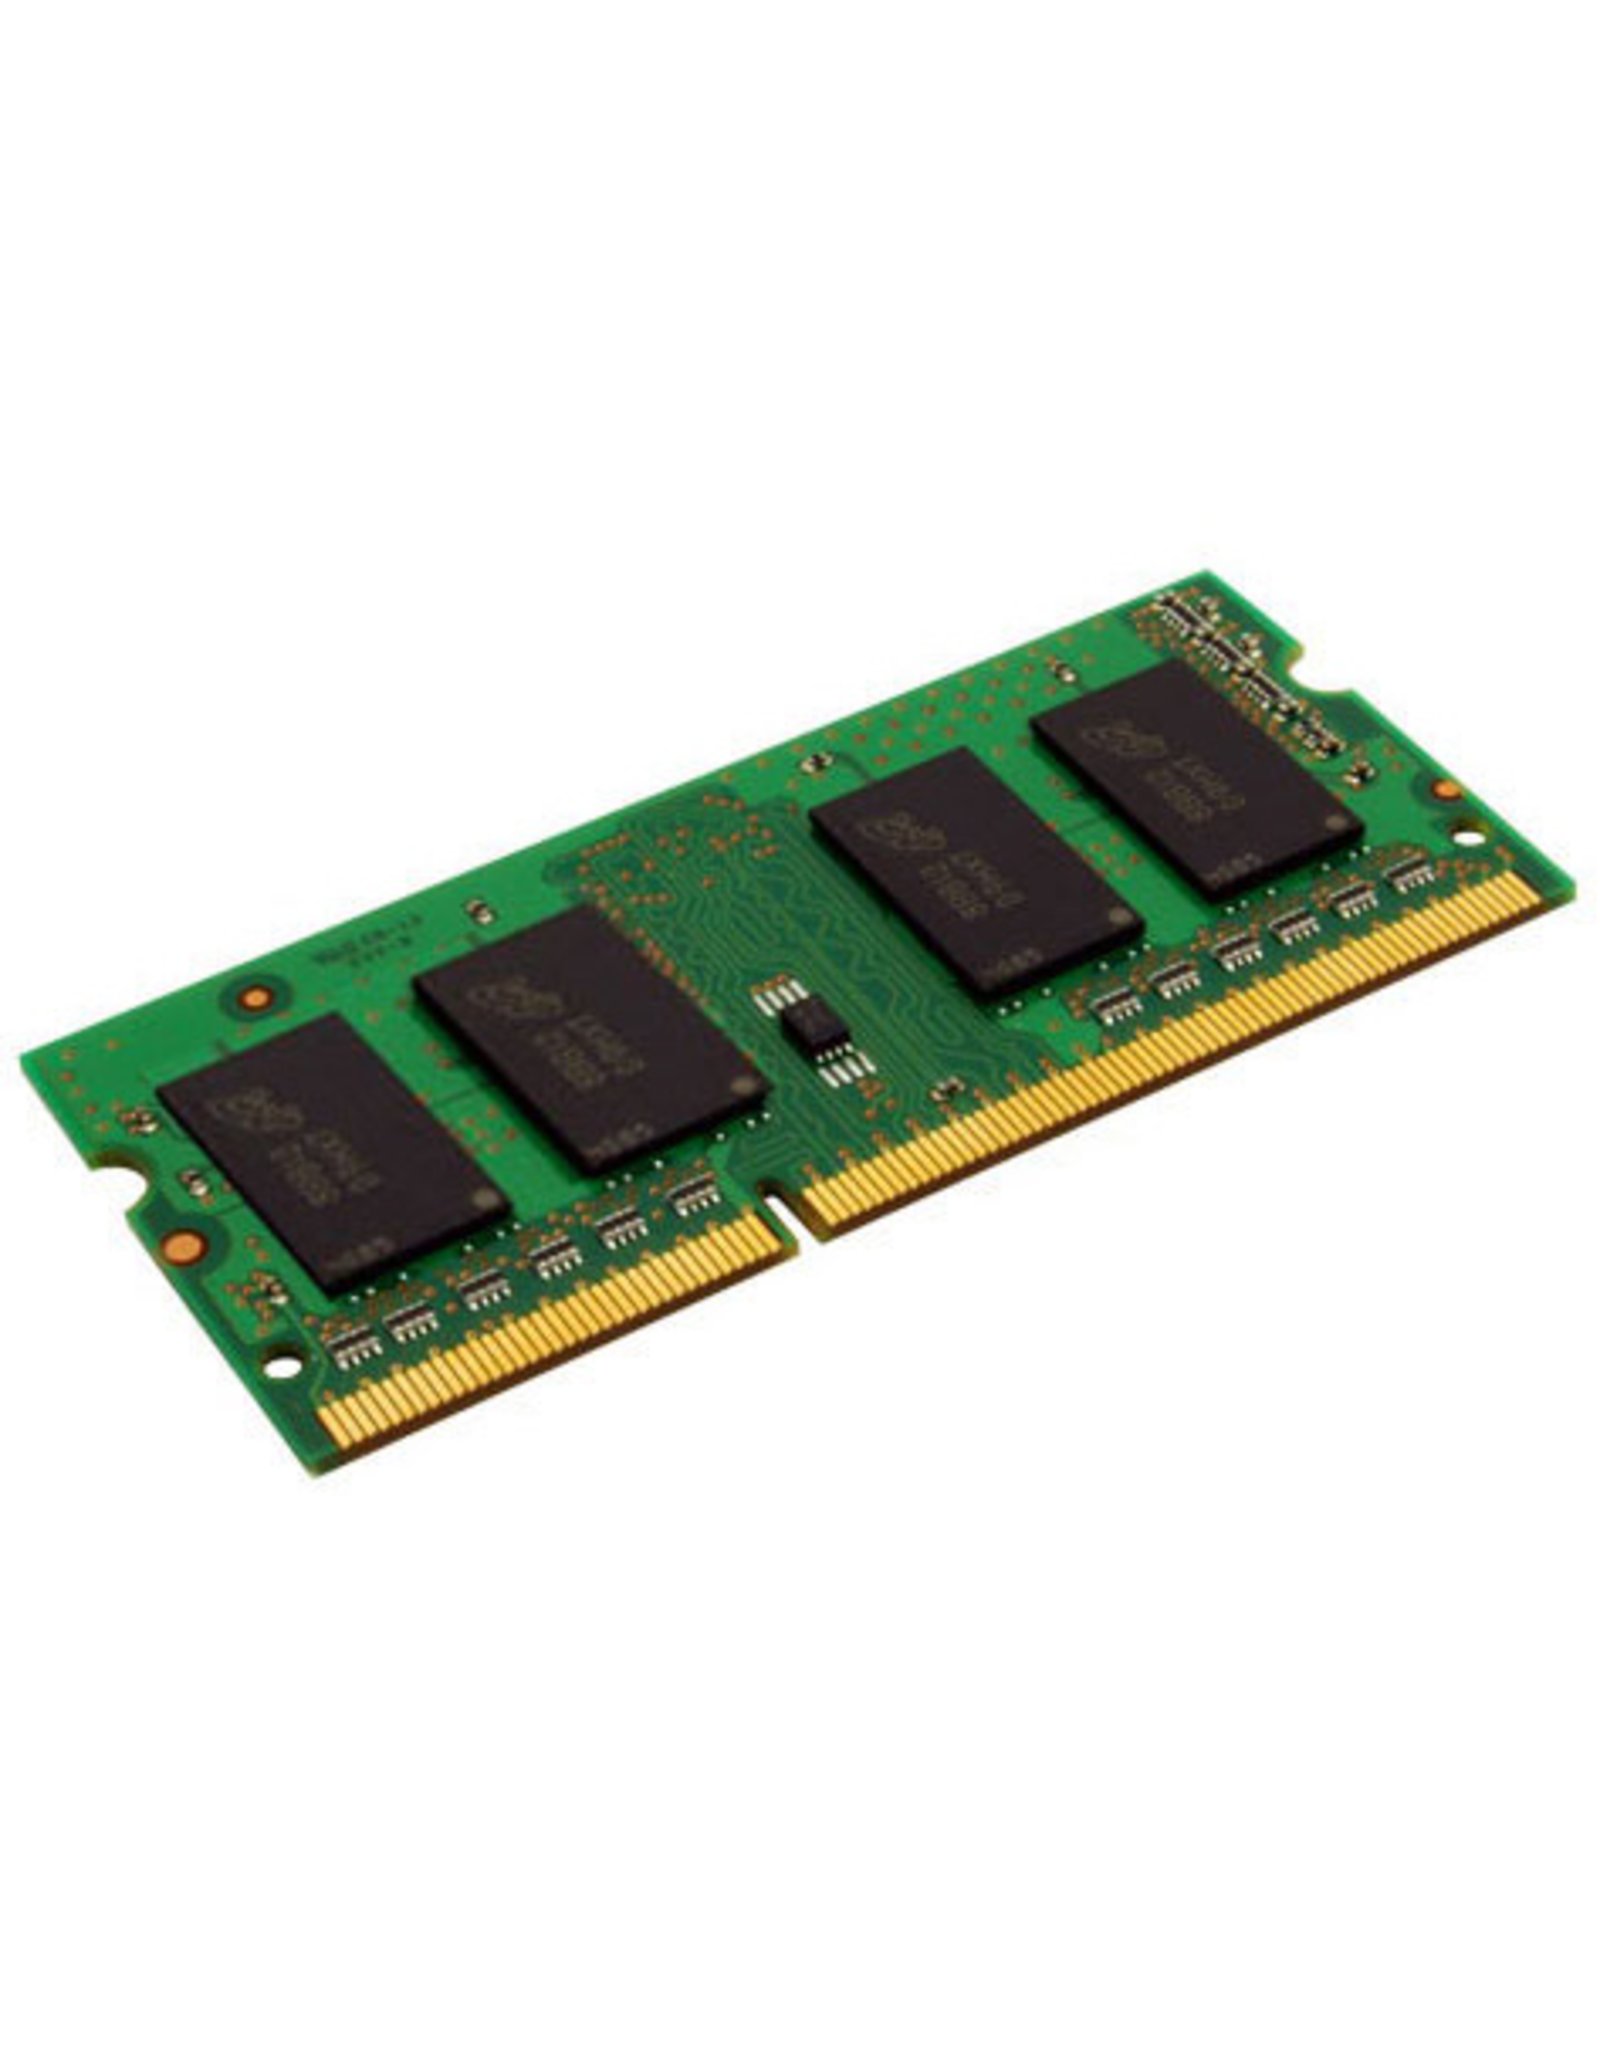 iLove Computers 4GB 1333Mhz (PC10600) DDR3 SODIMM 204 pin RAM Module